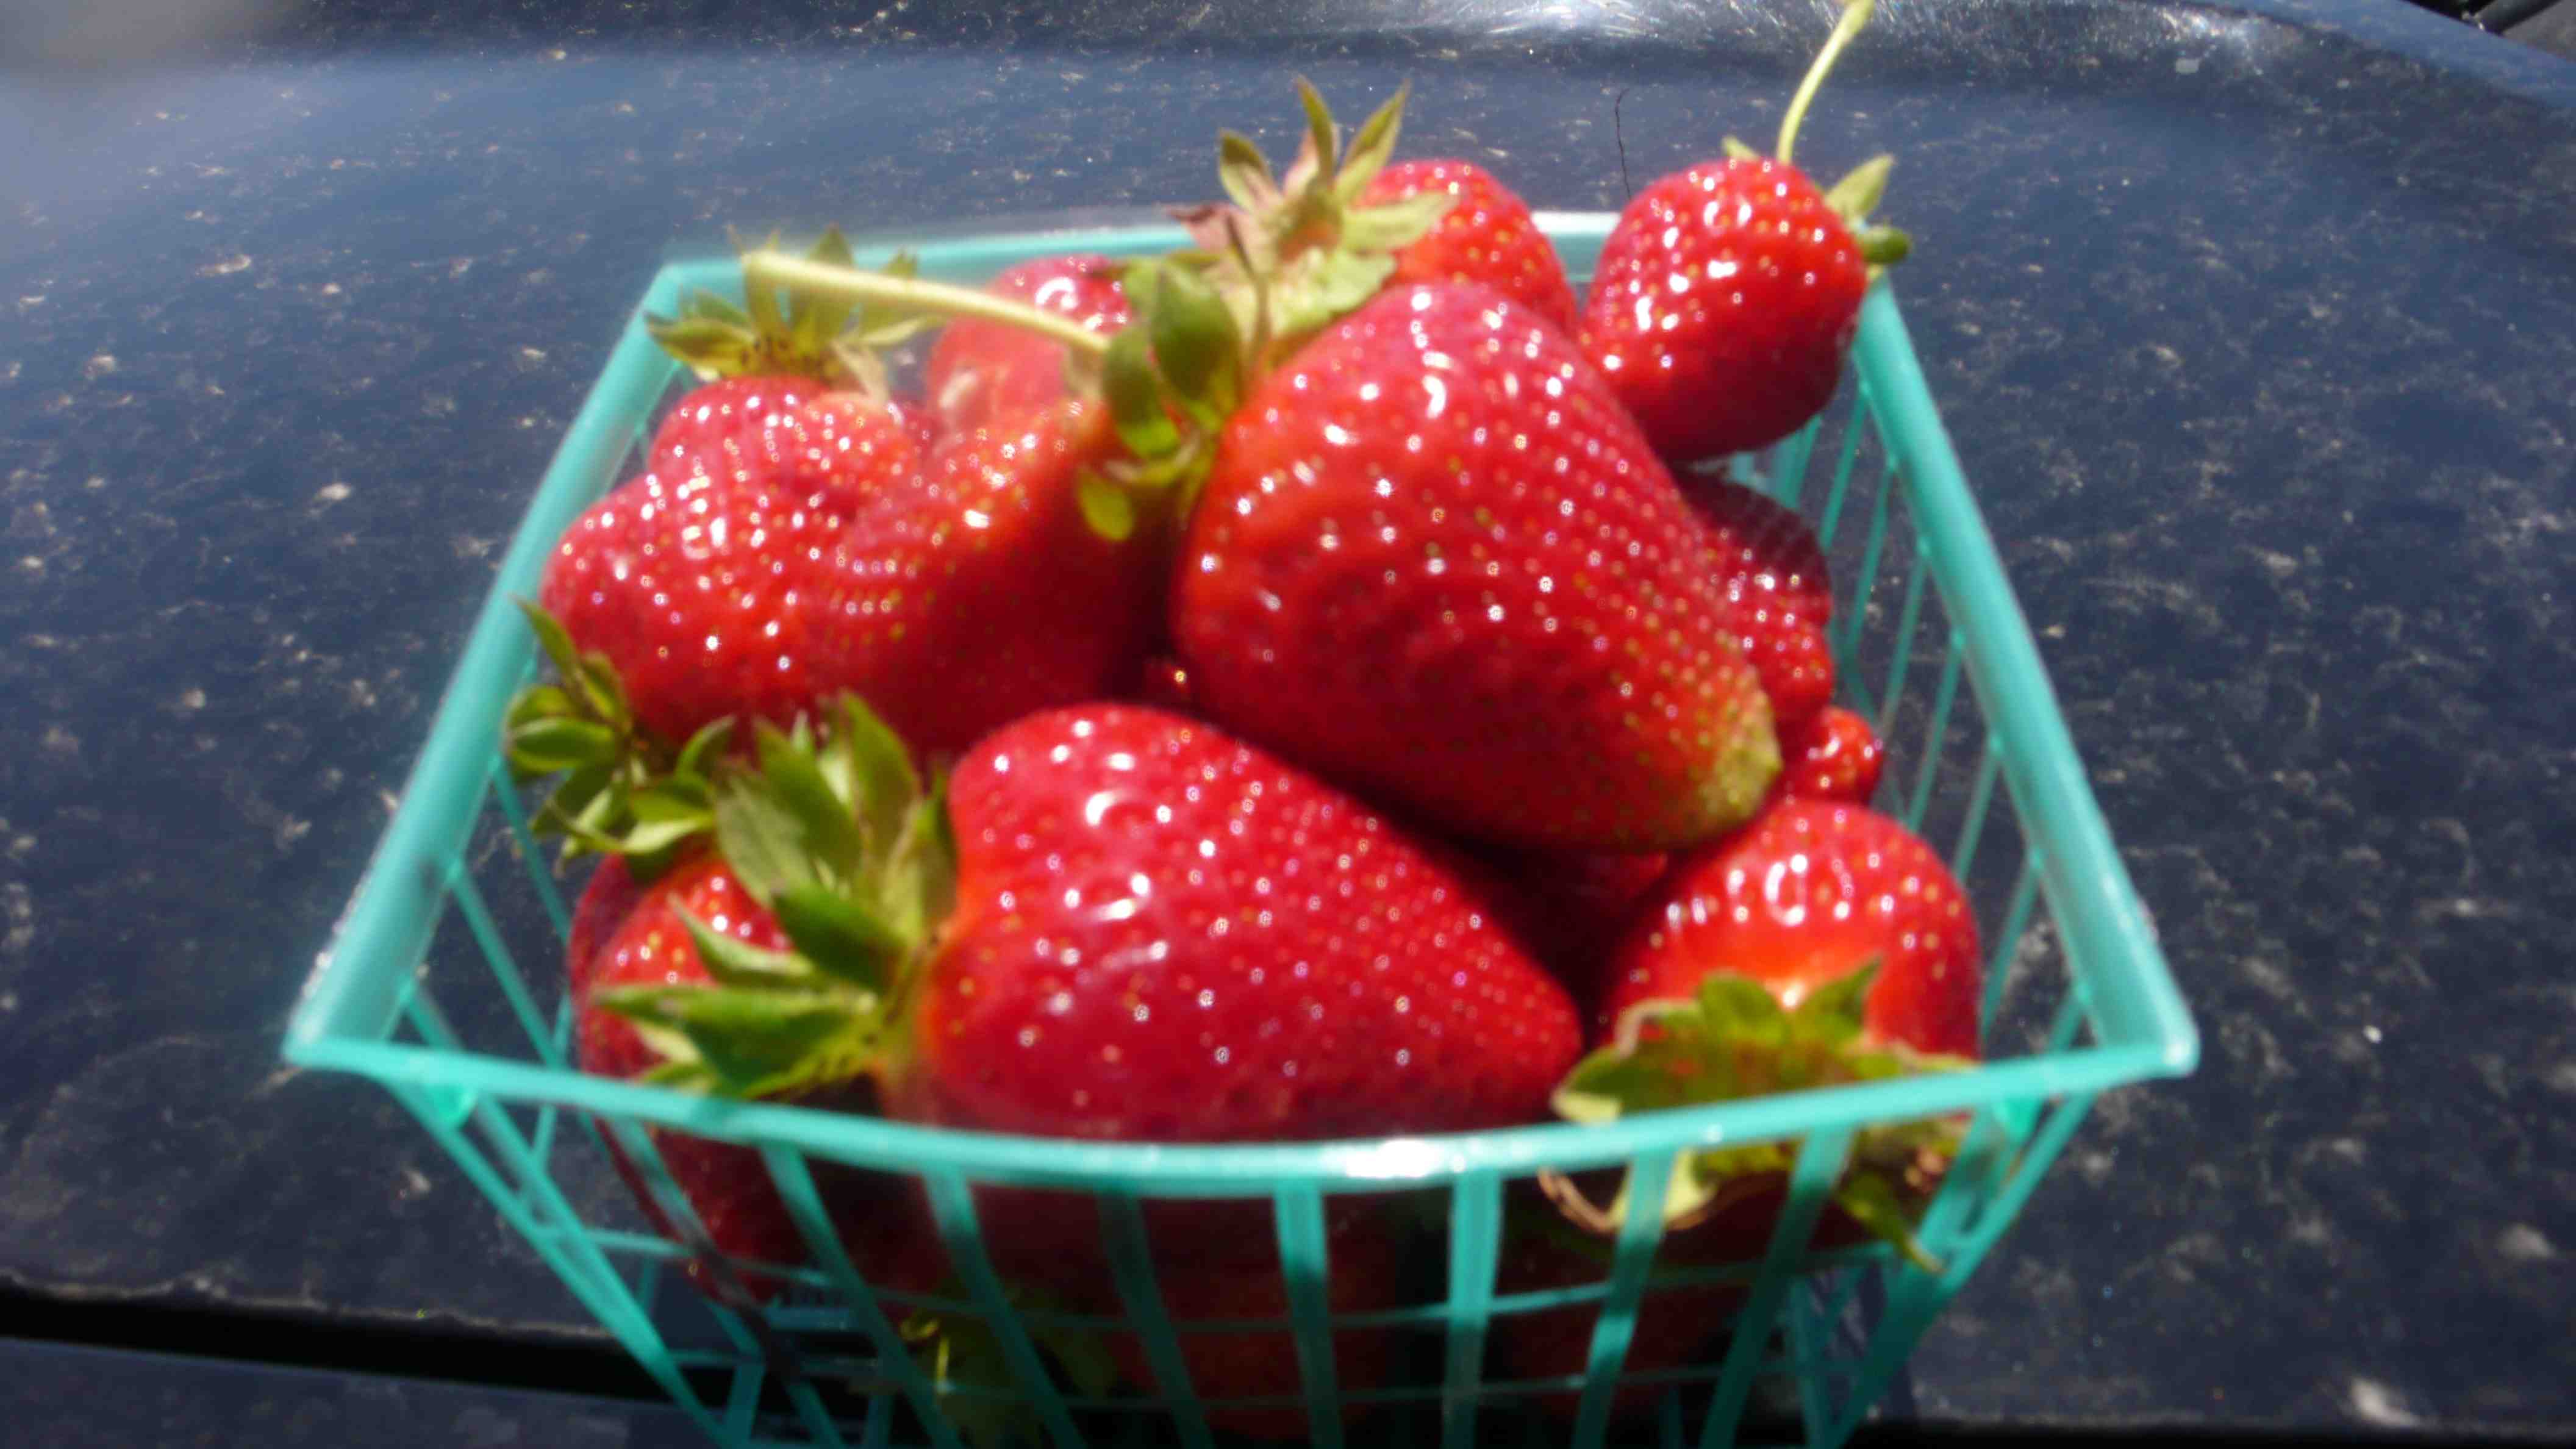 Really fresh strawberries